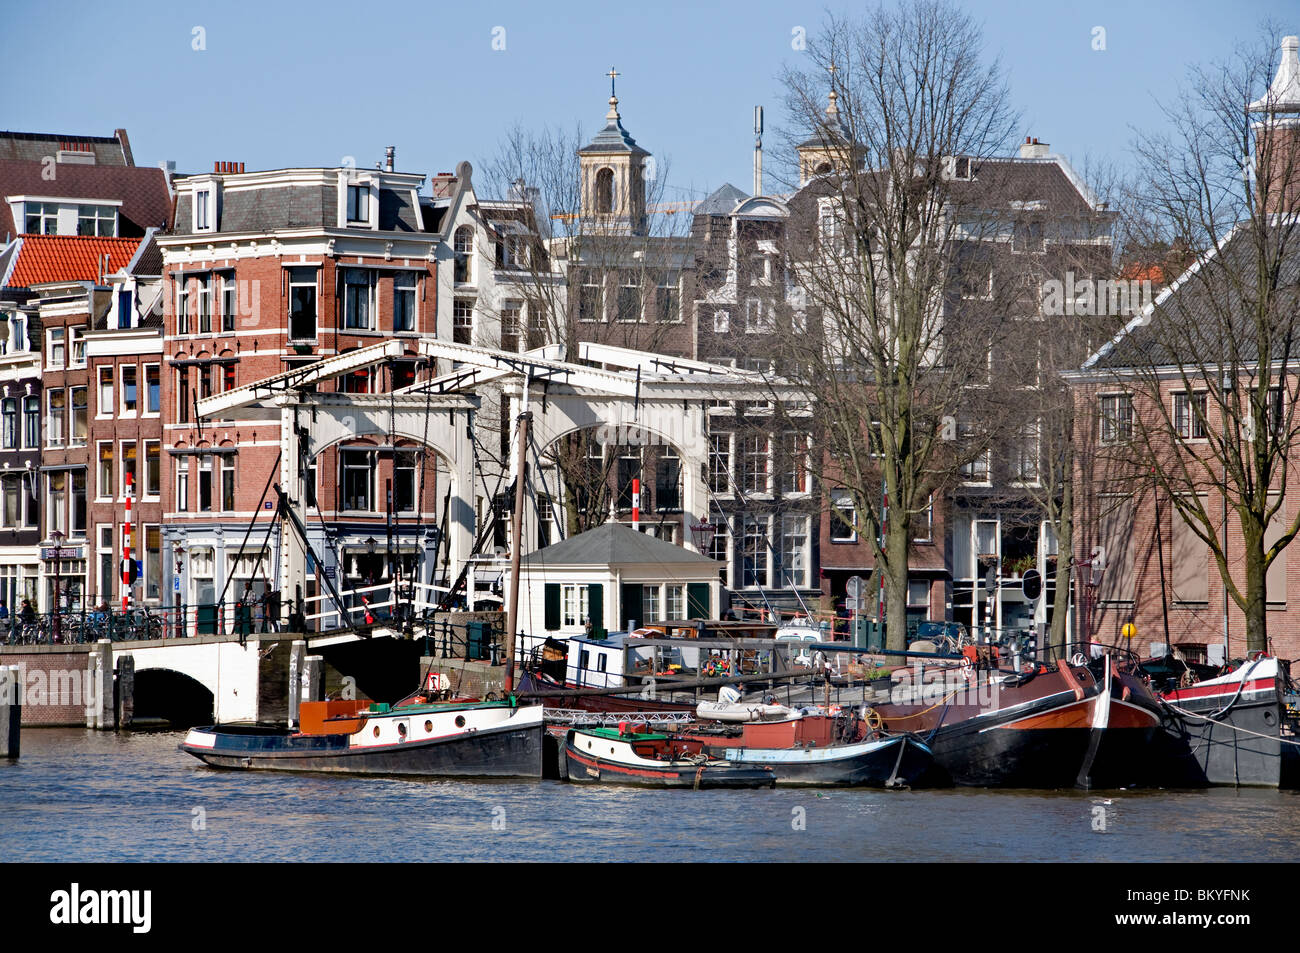 Walter Suskindbrug Amsterdam Amstel Canal House Boat Netherlands Stock Photo